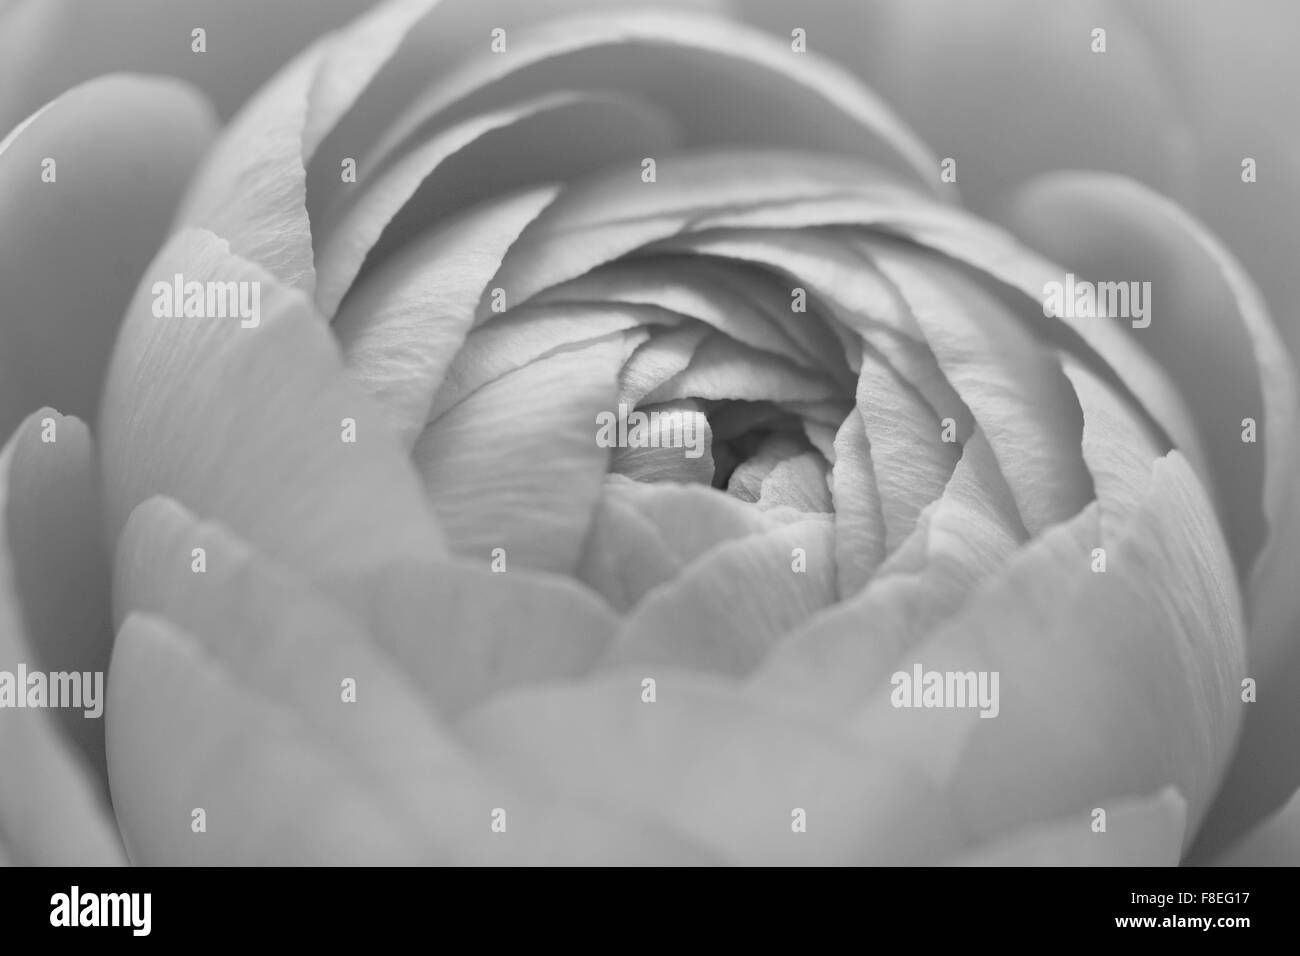 Ranunculus flower petals opening in macro - monochrome processing Stock Photo